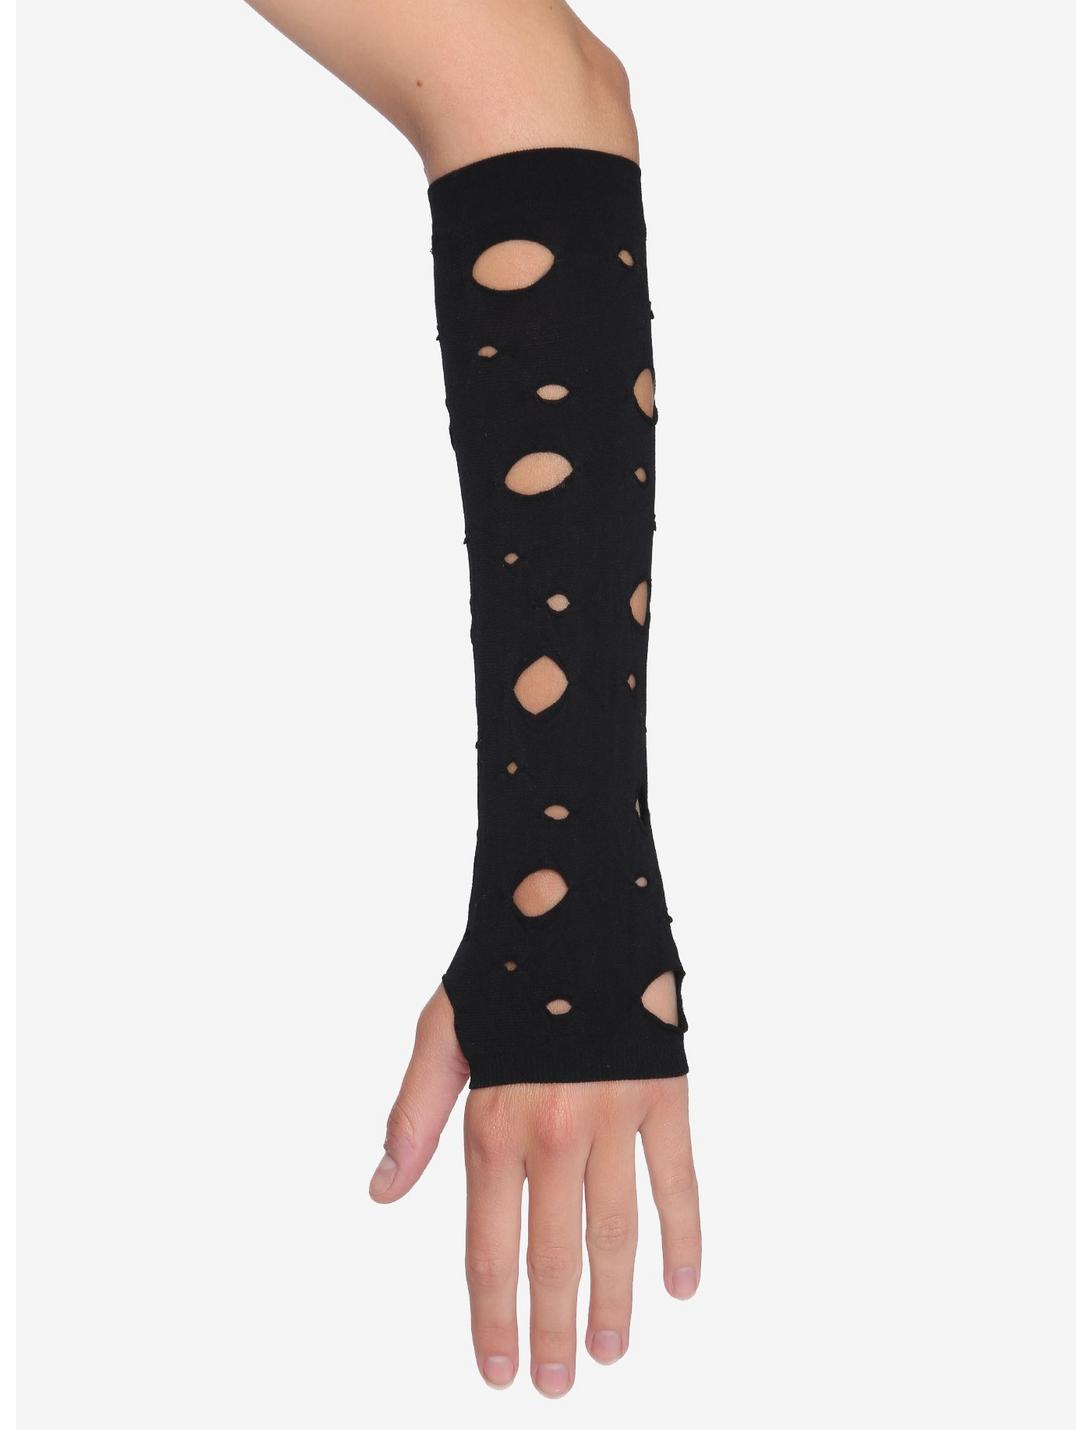 Black Distressed Arm Warmers, , hi-res